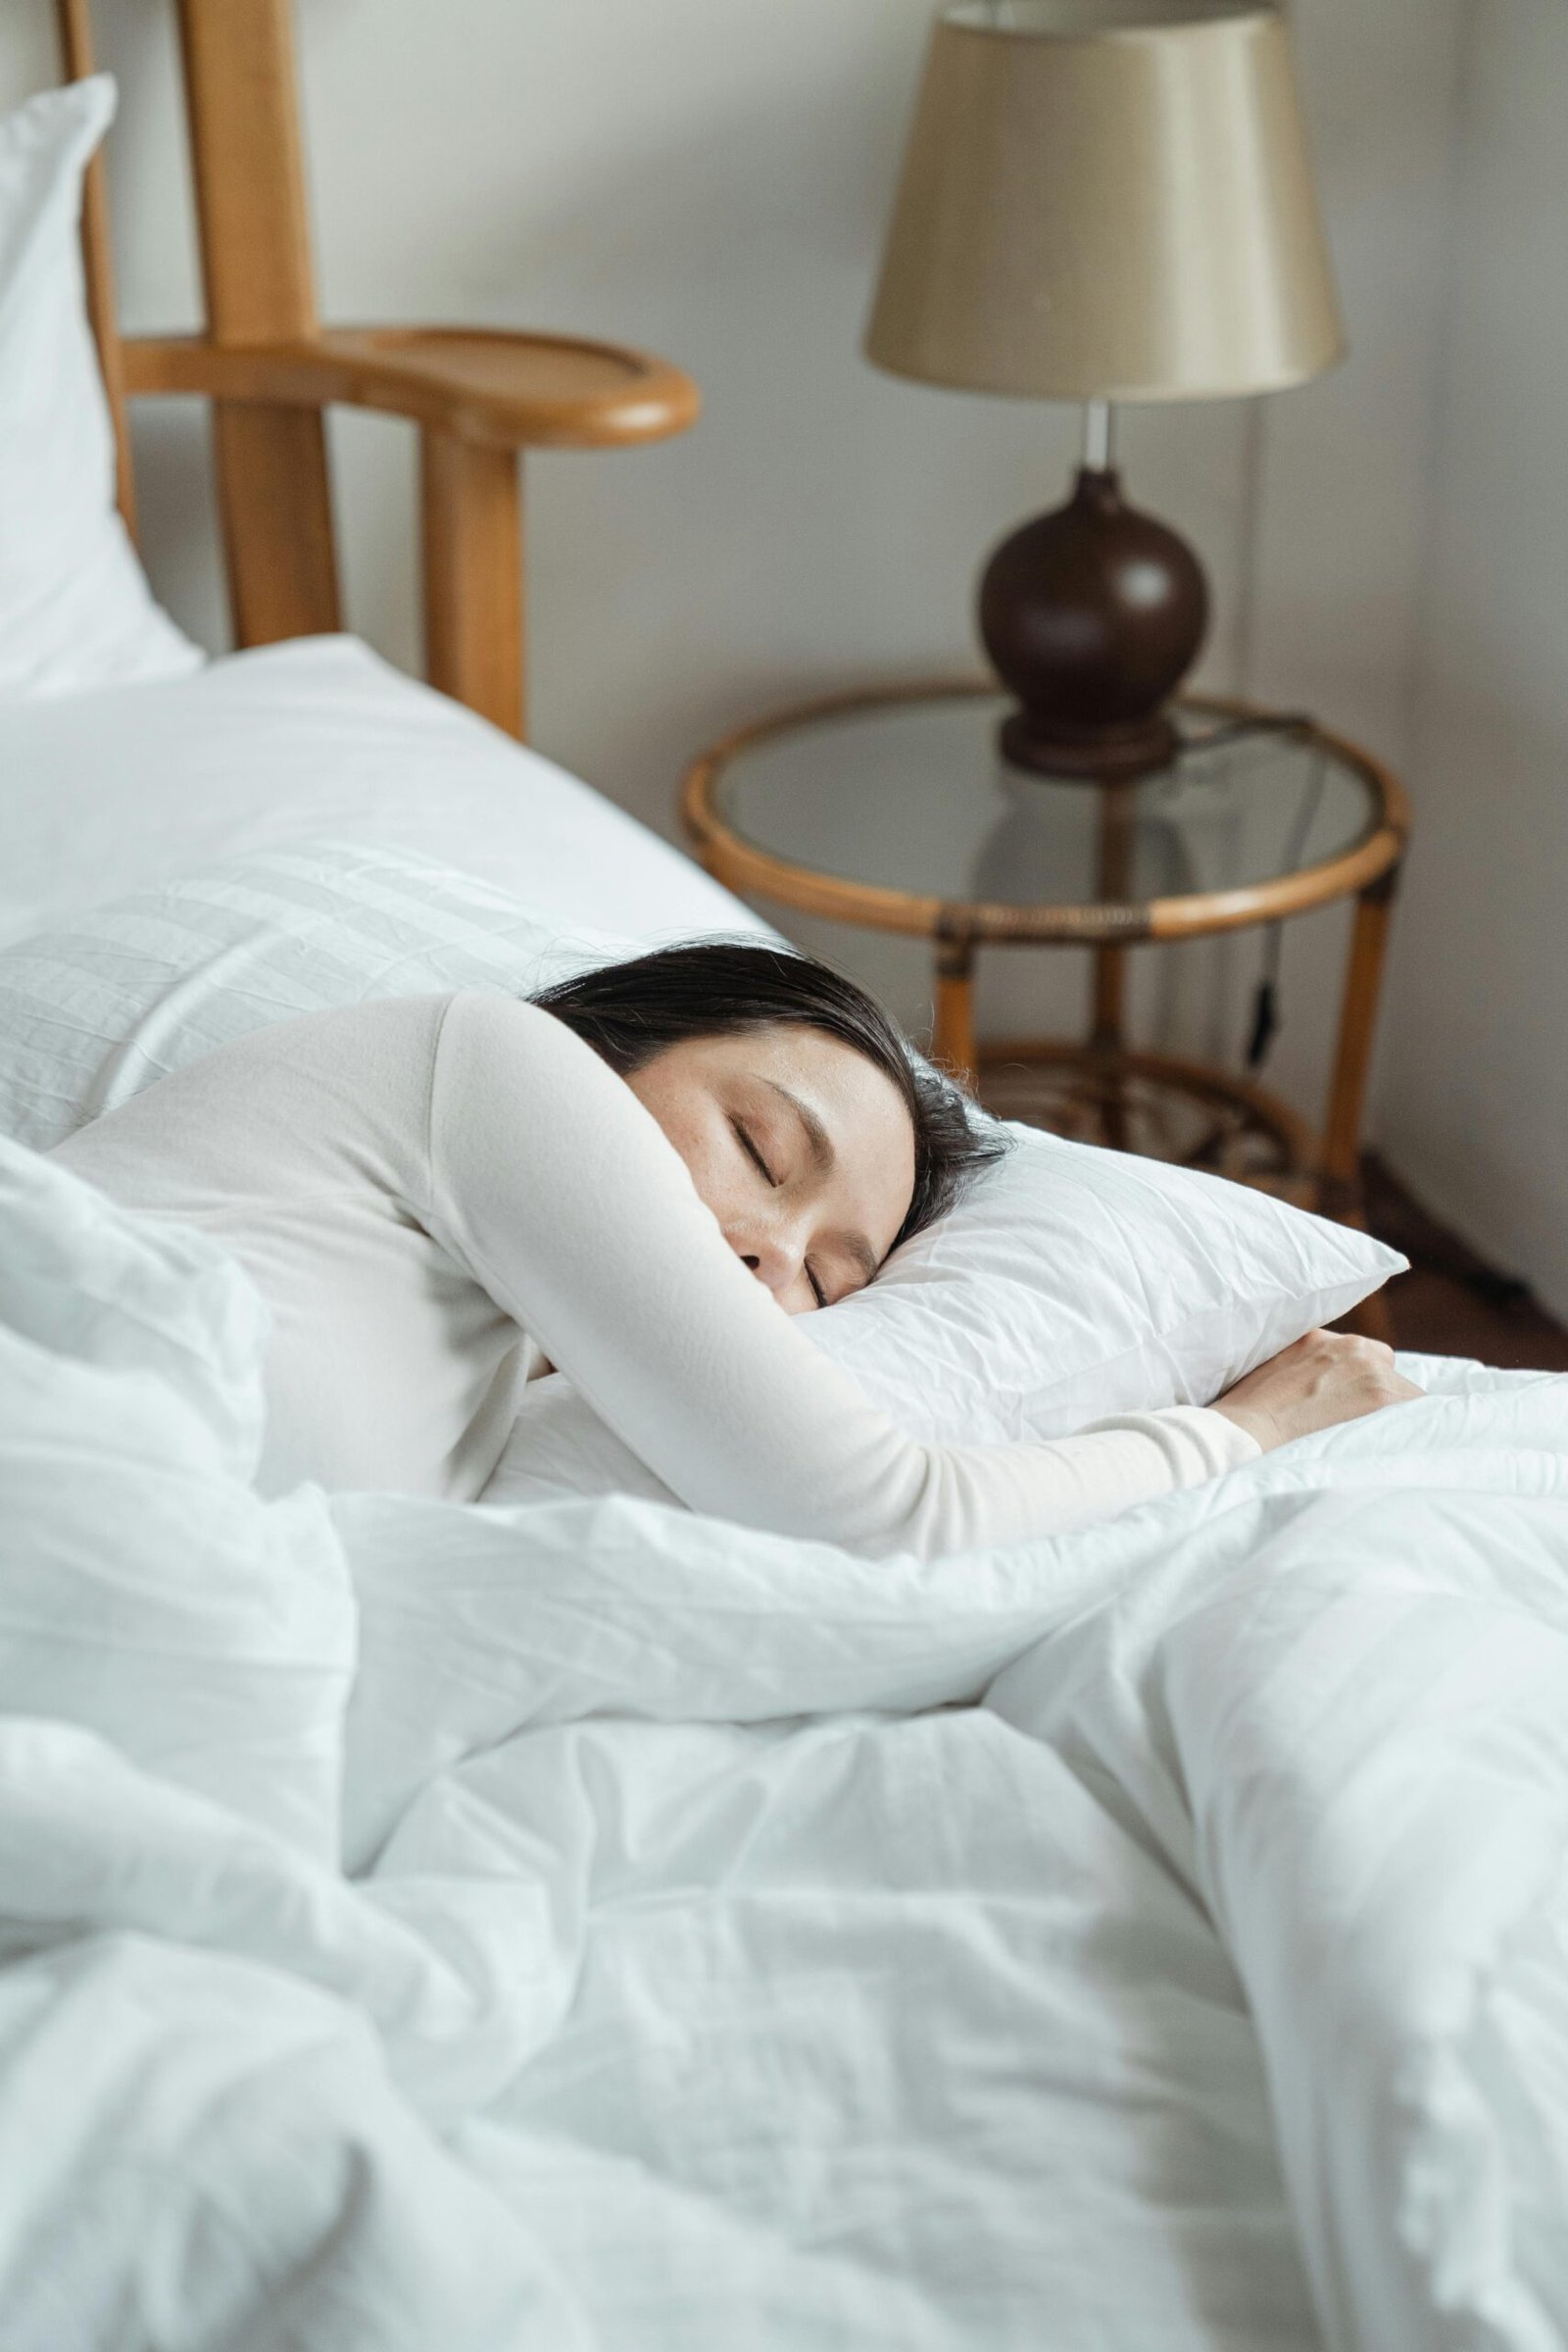 7 Lazy Methods to Make Money While You Sleep